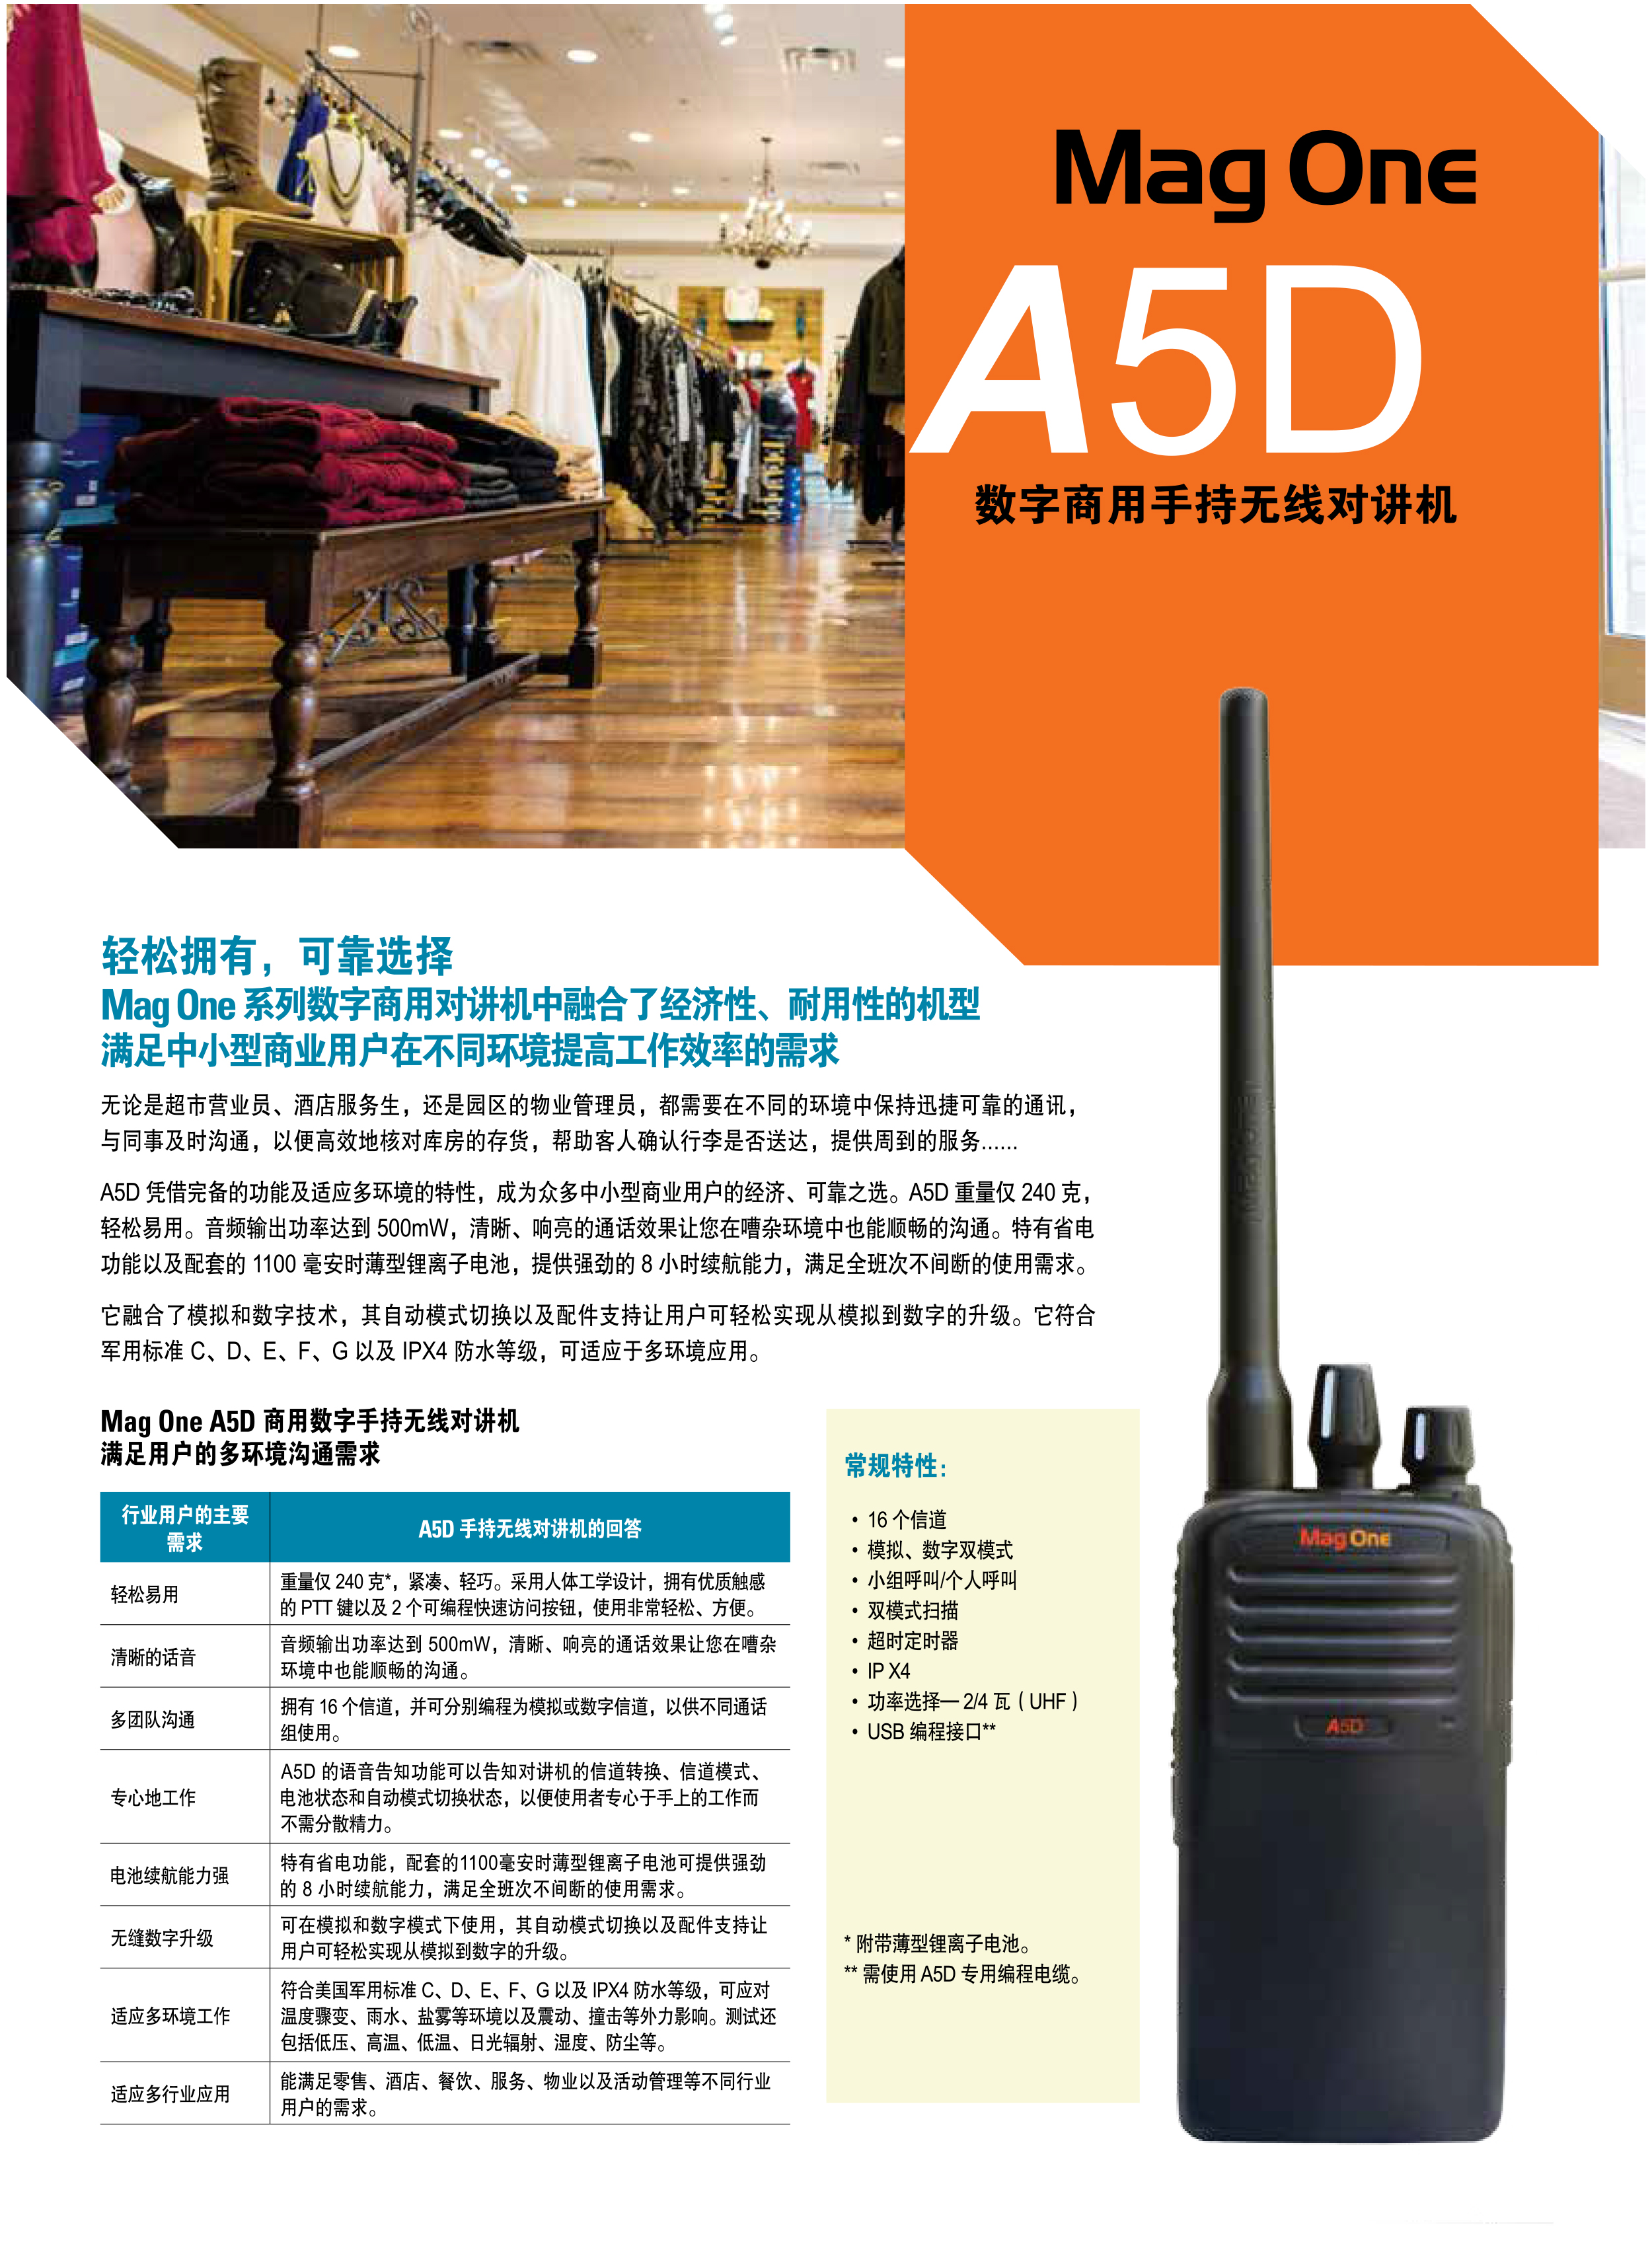 Mag-One-A5D-数字商用手持无线对讲机彩页_01